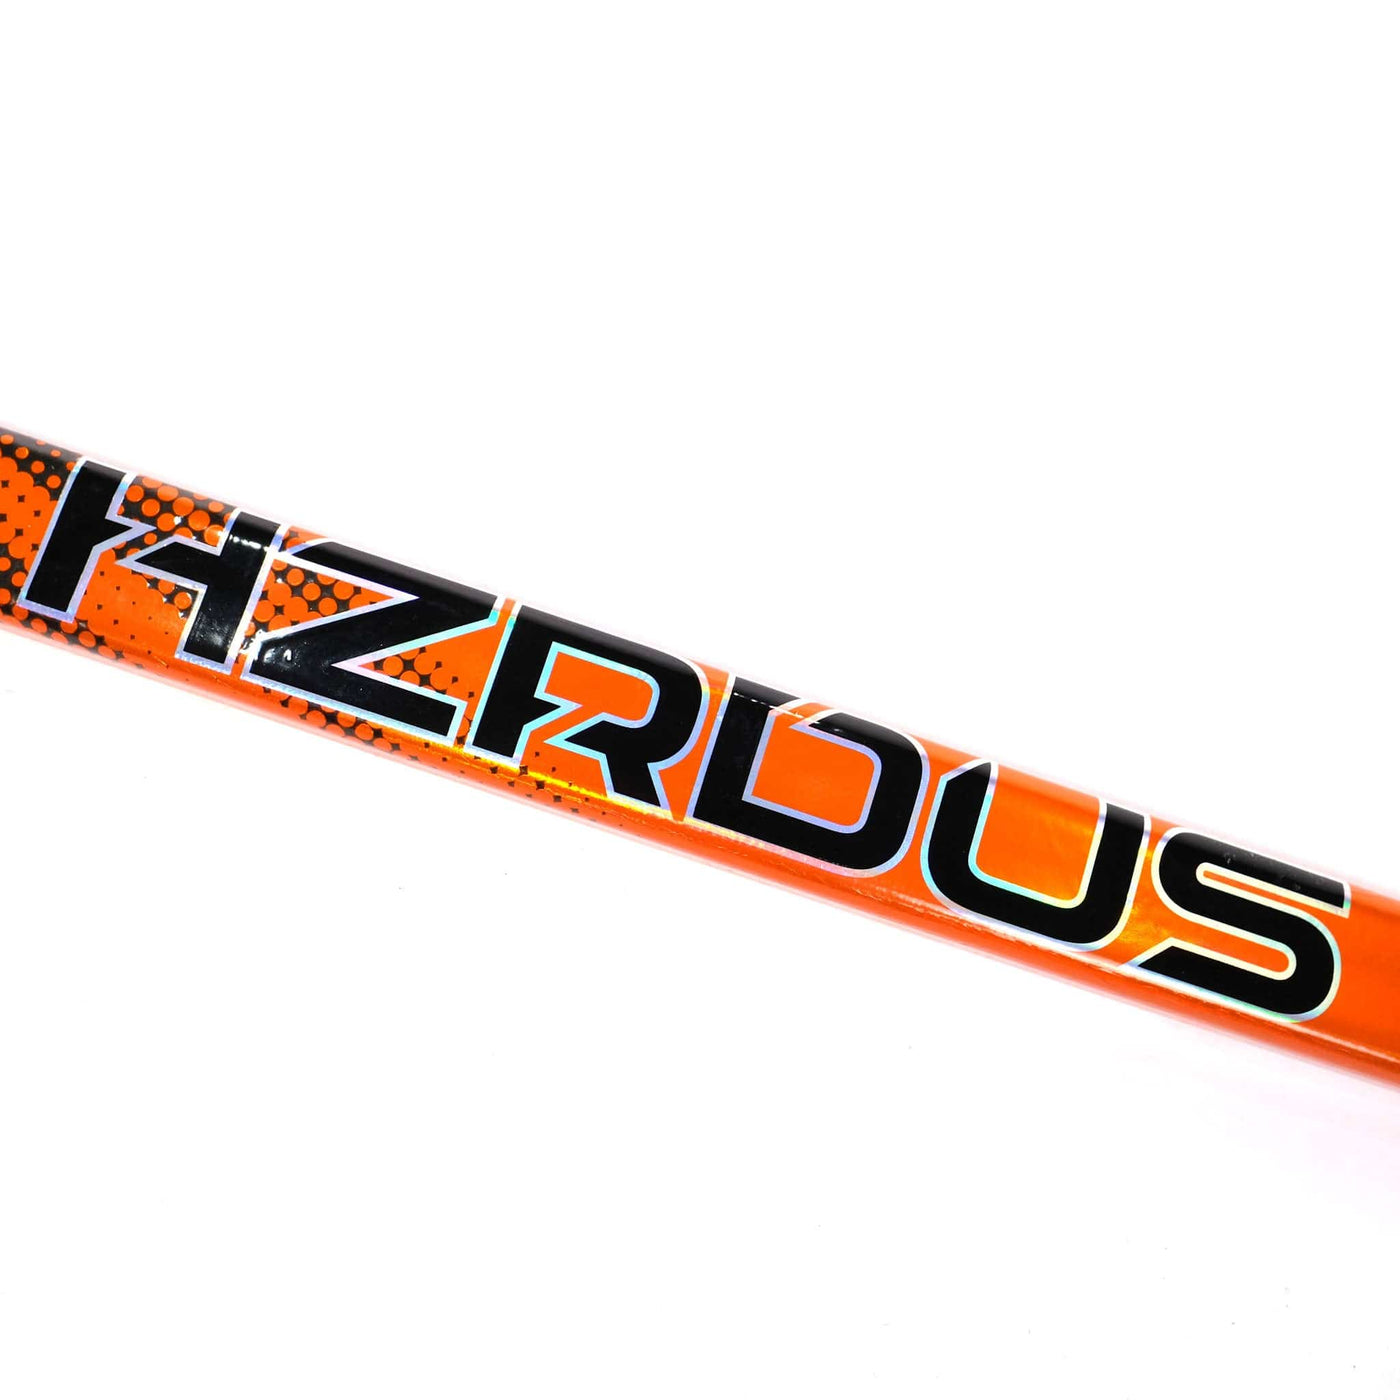 TRUE HZRDUS PX Youth Hockey Stick - 15 Flex - The Hockey Shop Source For Sports